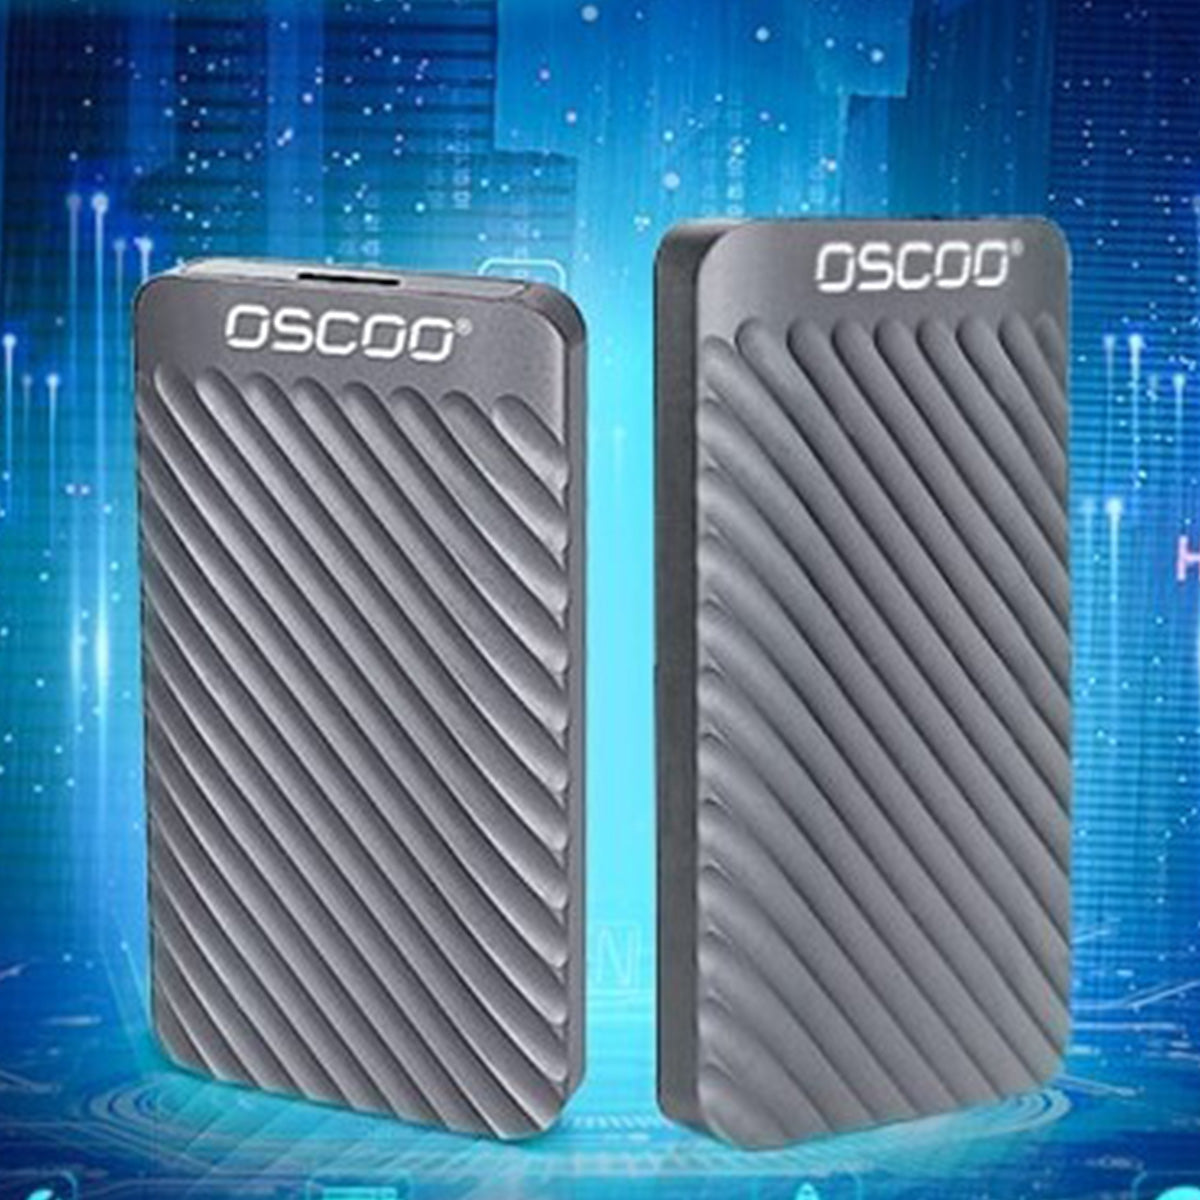 Verbatim OSCOO 512GB External SSD (Silver)